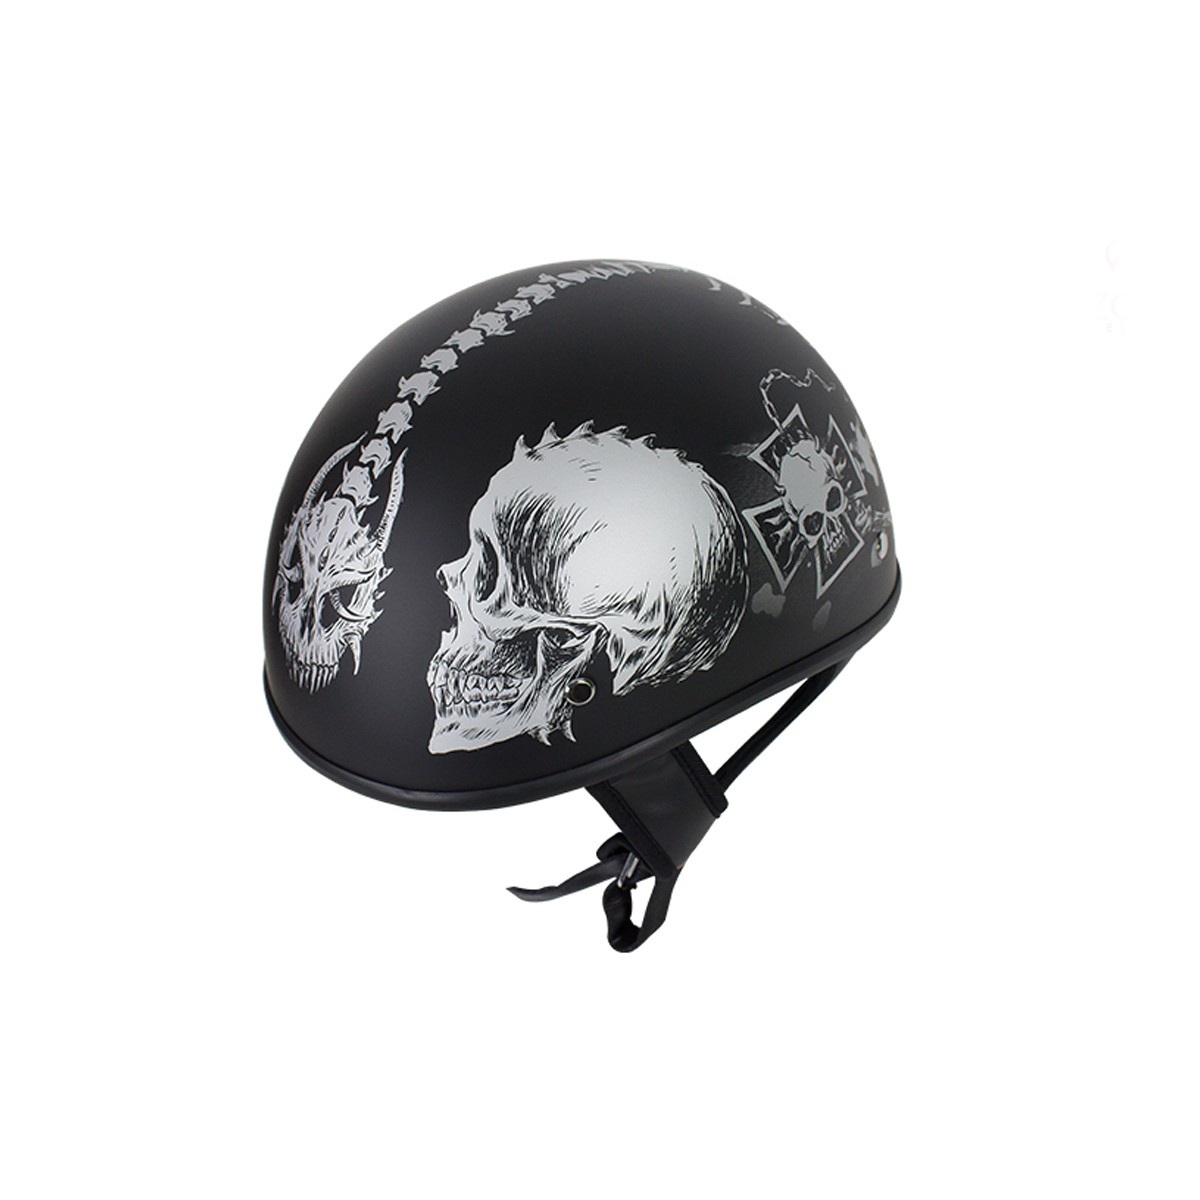 Flat Black DOT Helmet with Grey Horned Skeletons